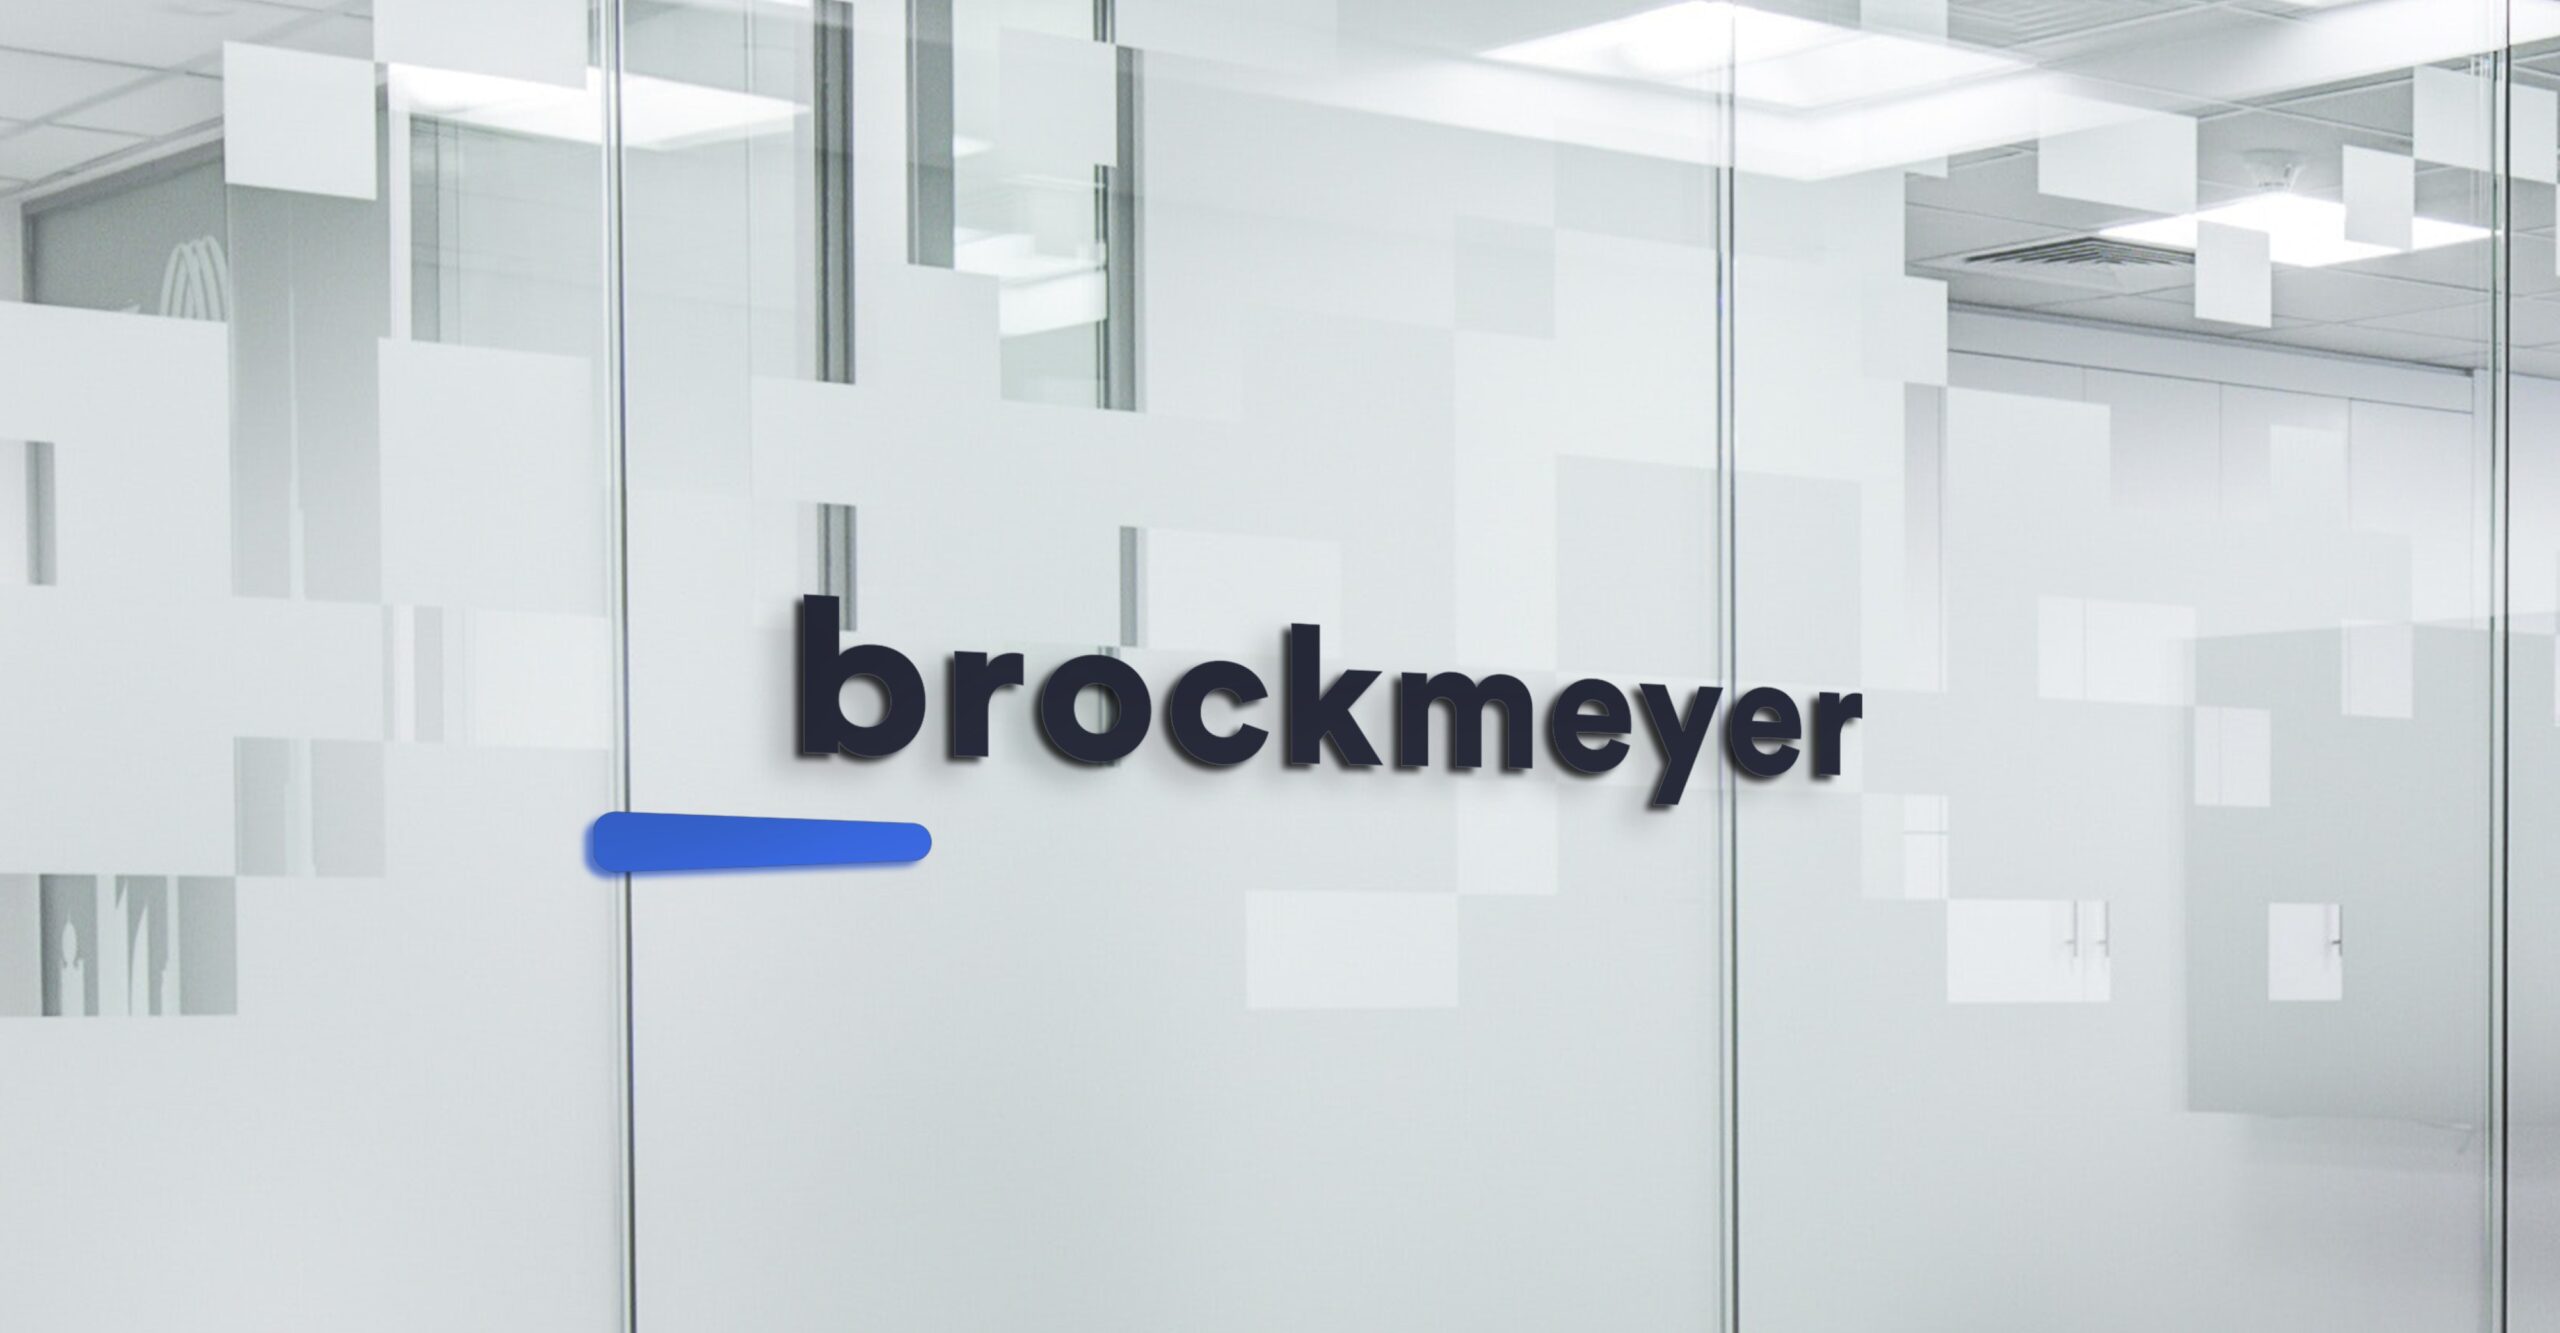 030-brockmeyer_2-scaled